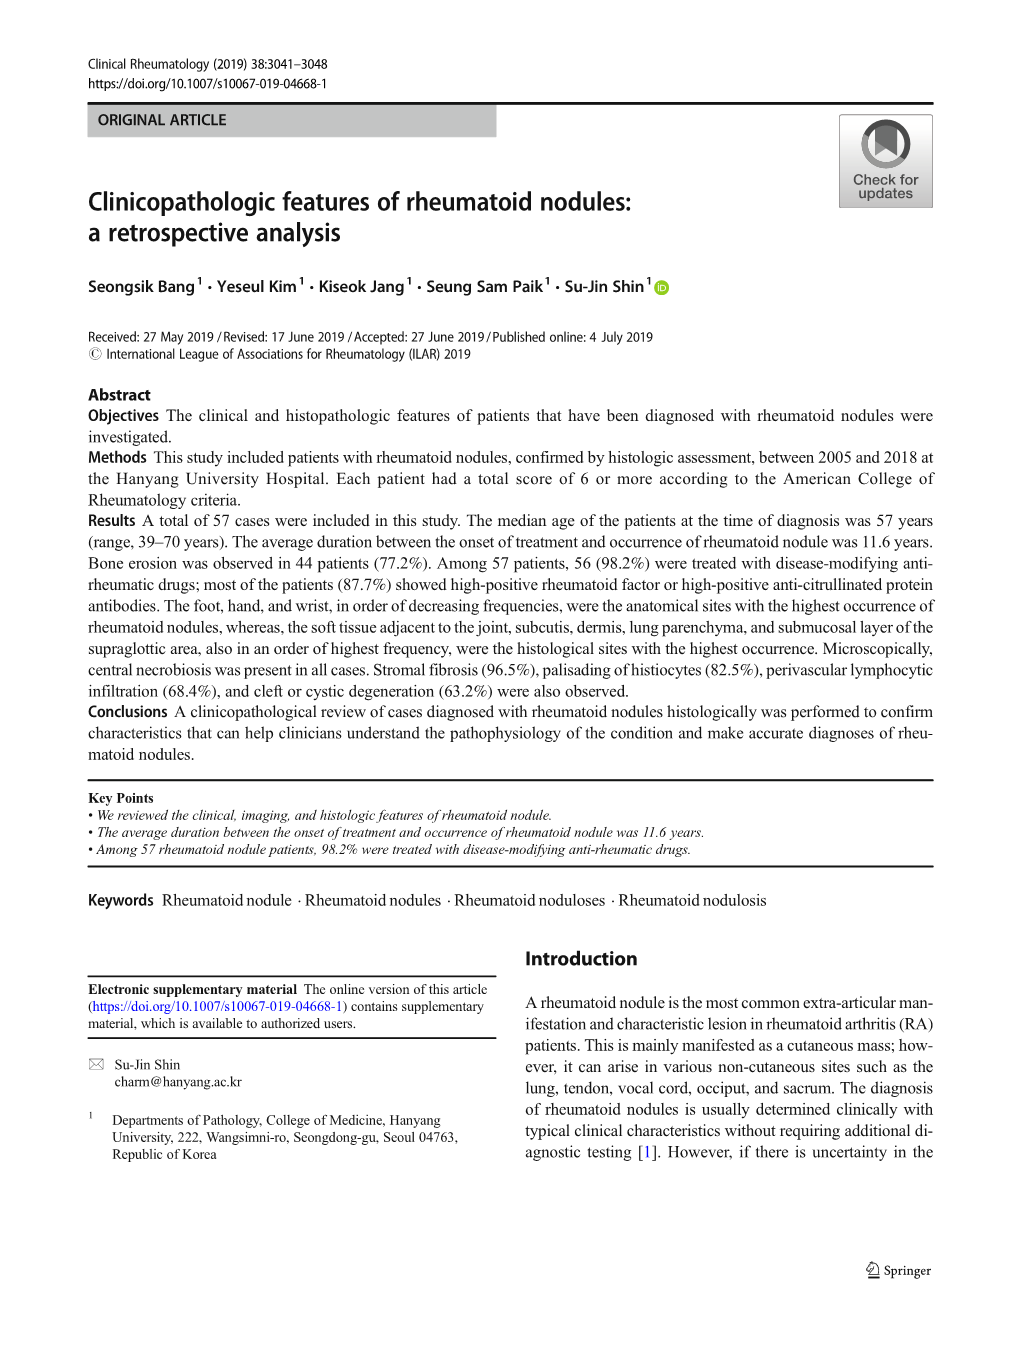 Clinicopathologic Features of Rheumatoid Nodules: a Retrospective Analysis